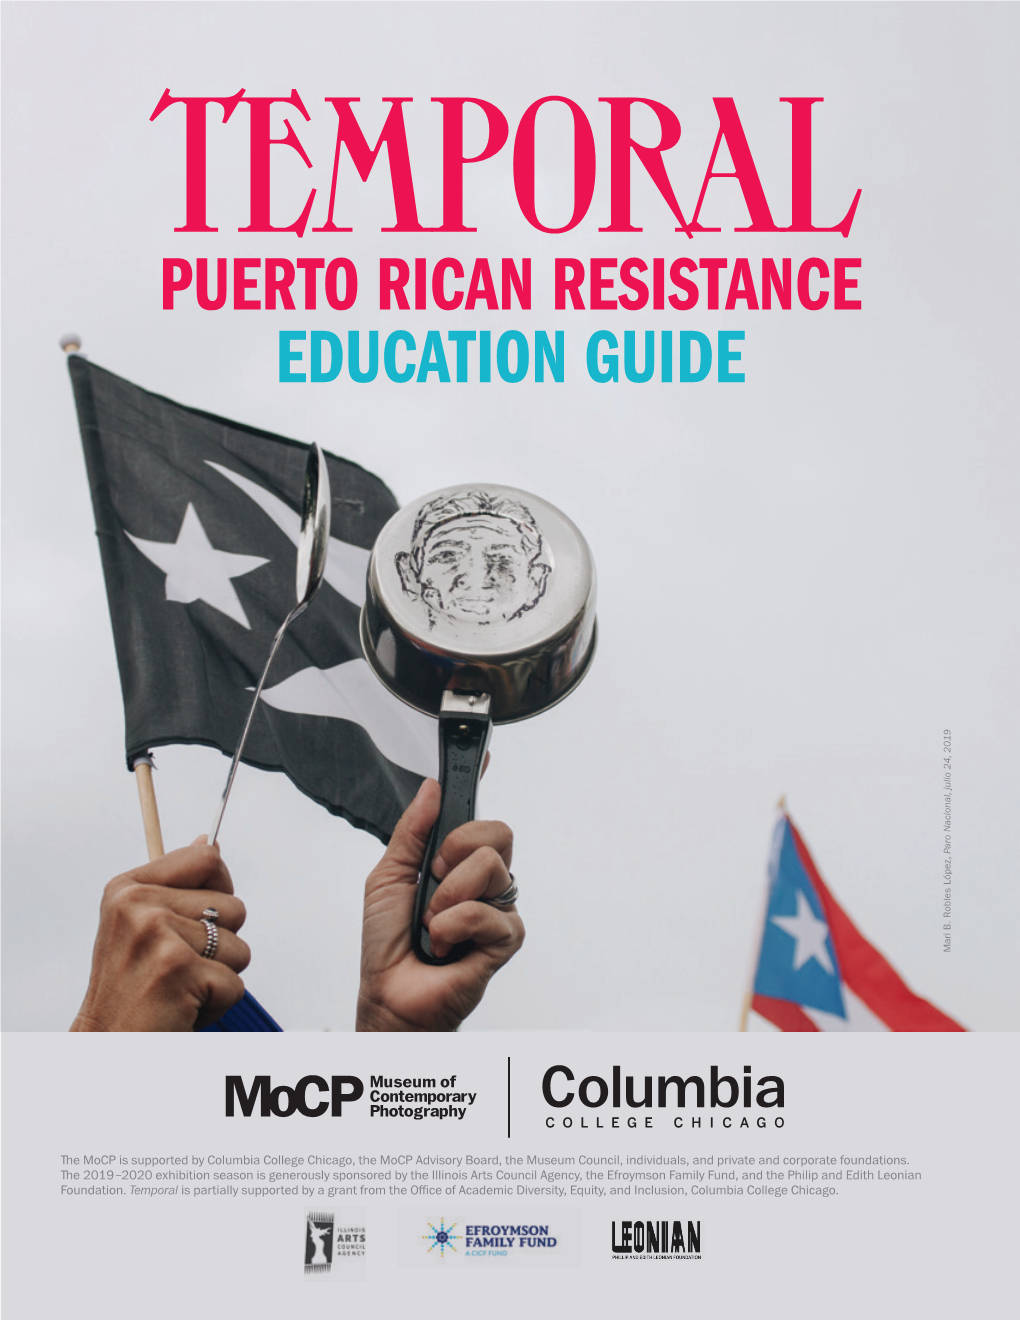 PUERTO RICAN RESISTANCE EDUCATION GUIDE Paro Nacional, Julio 24, 2019 Julio 24, Nacional, Paro Mari B